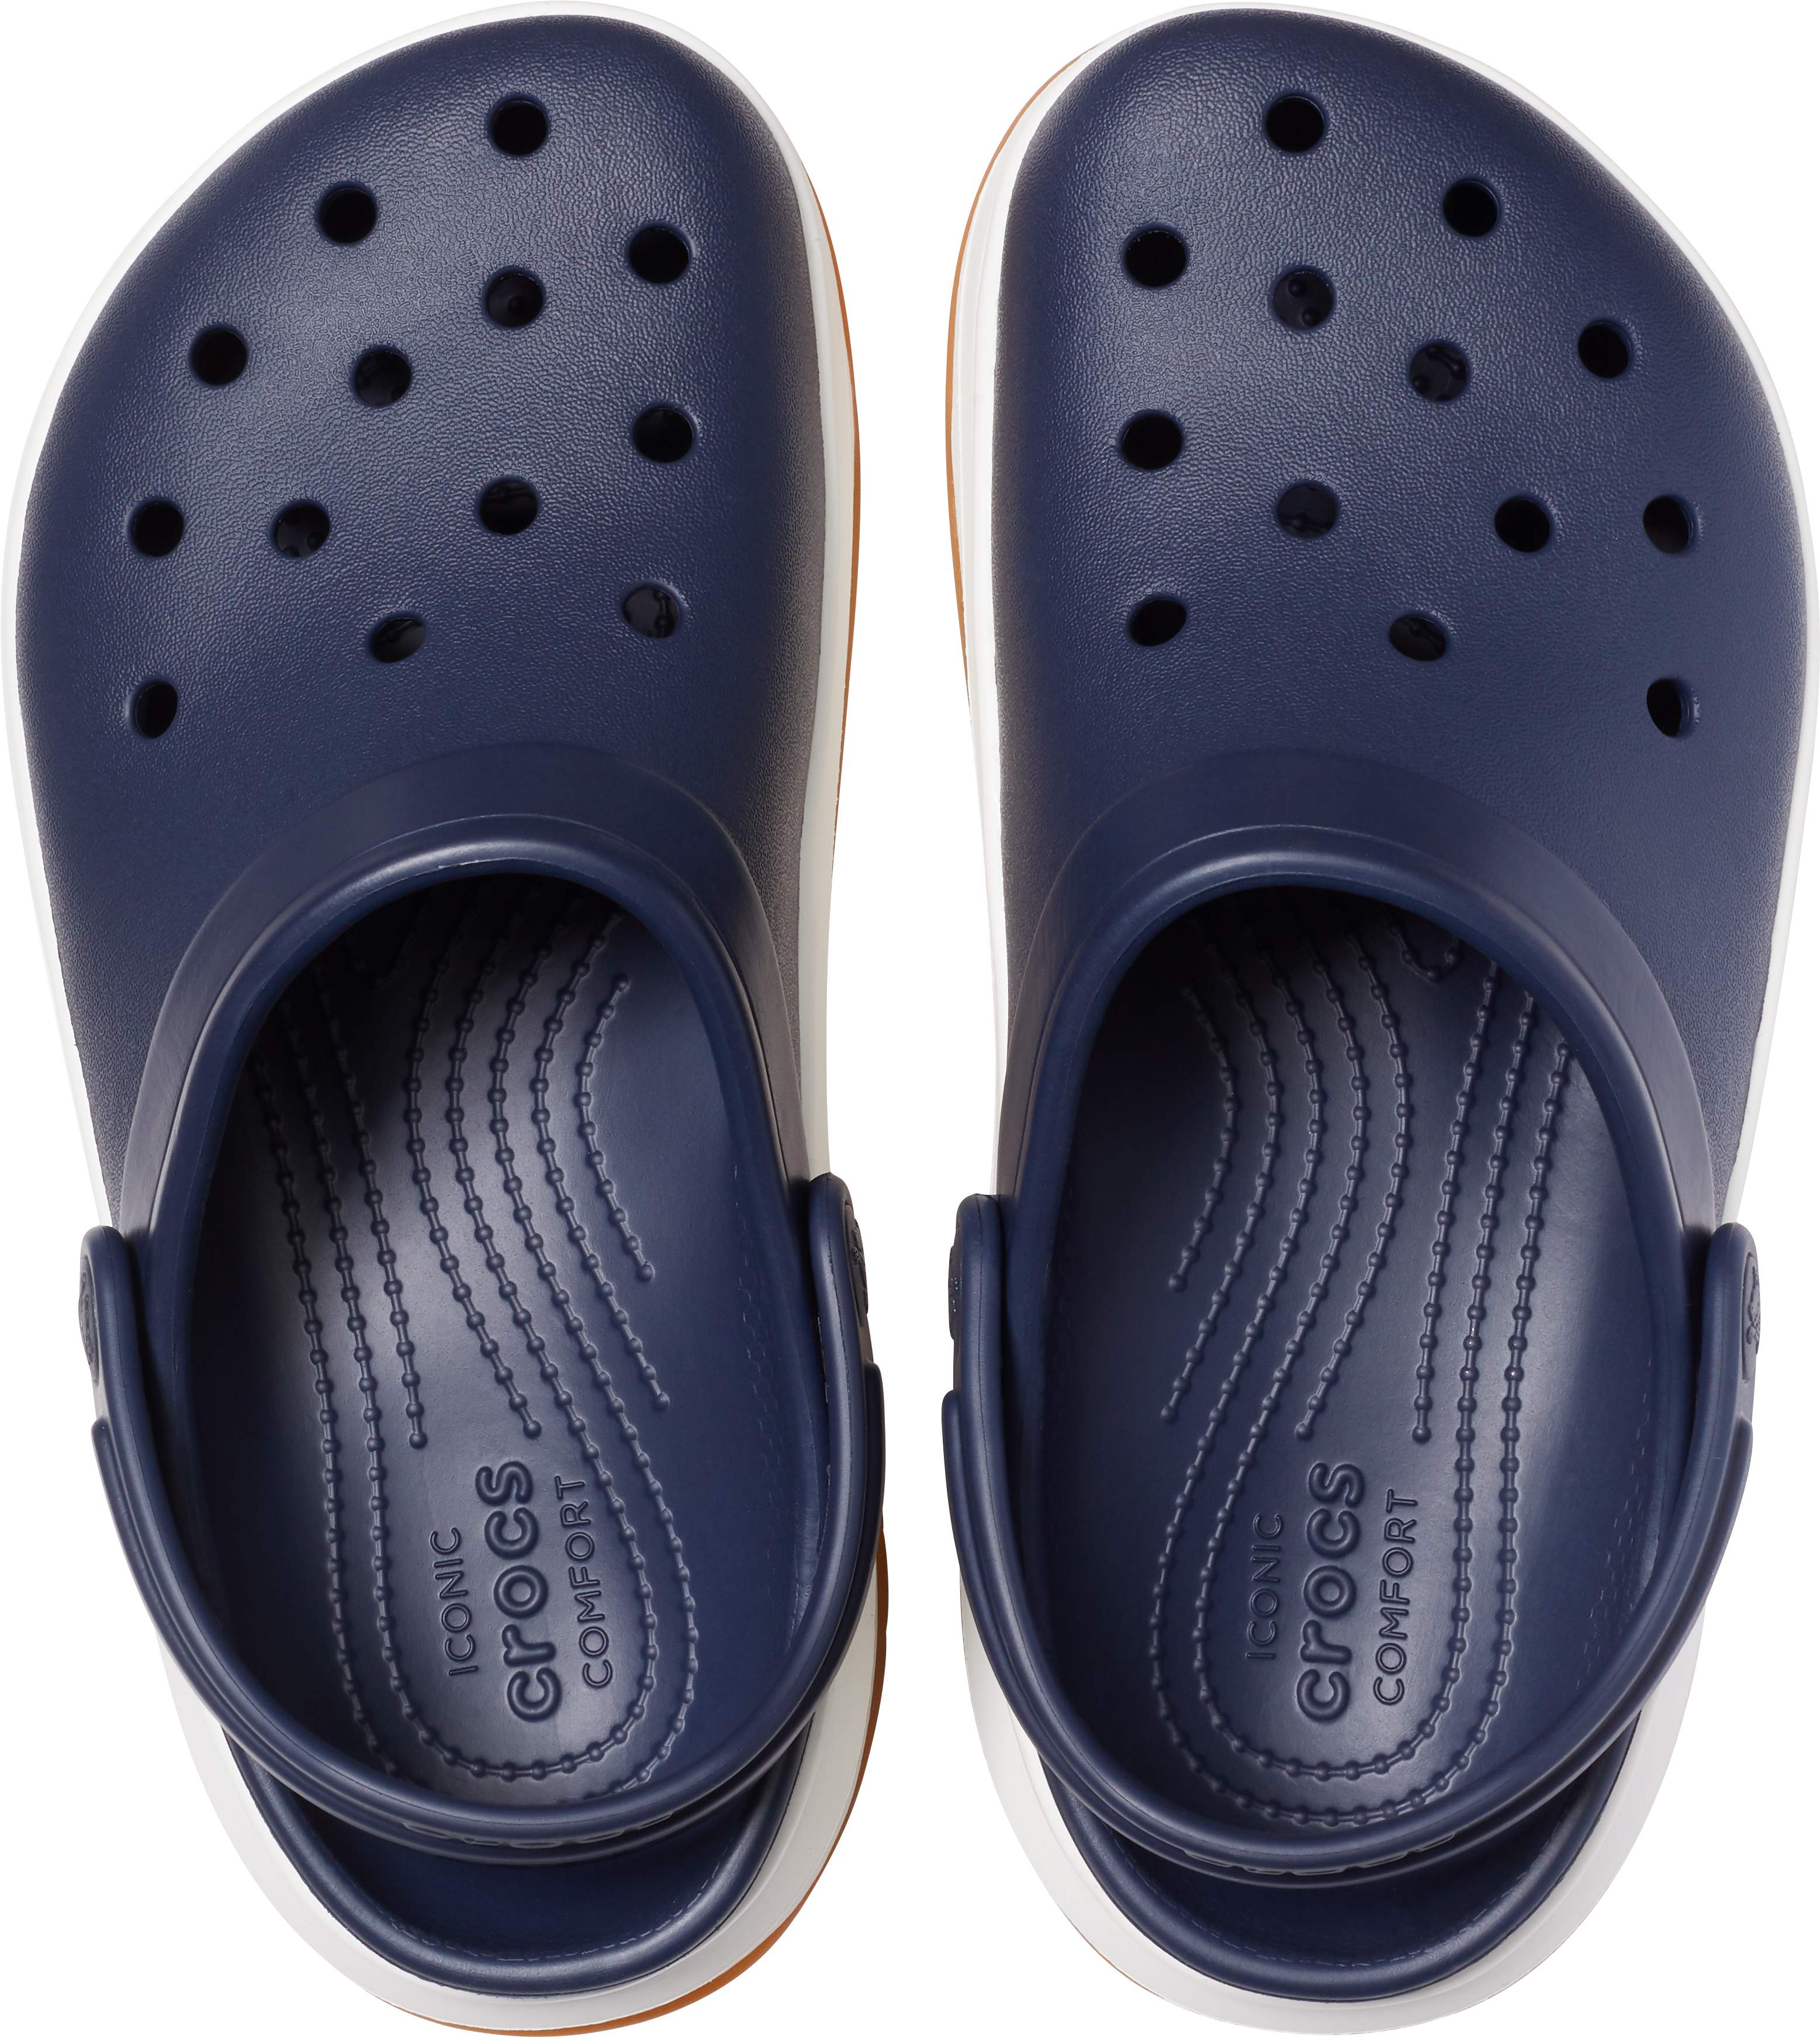 iconic crocs comfort slippers